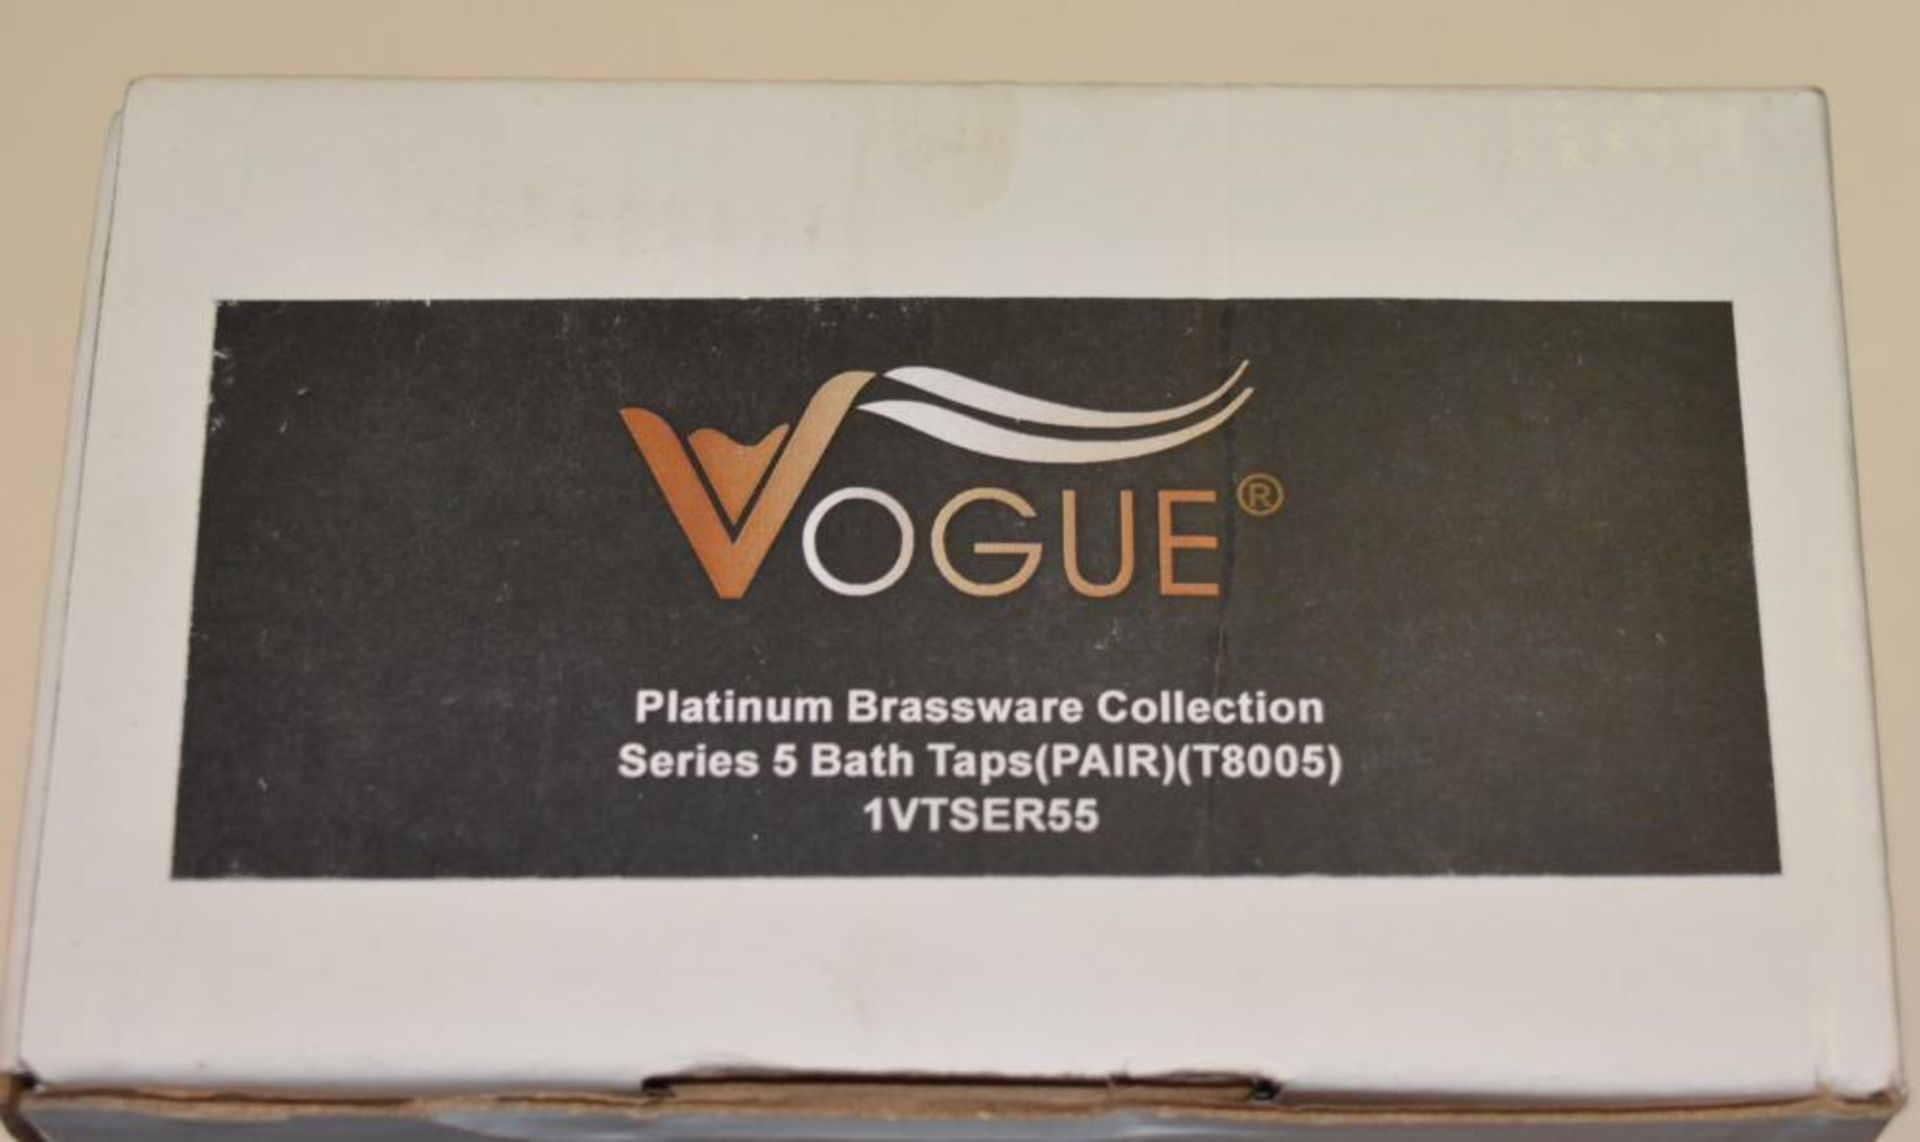 1 x Series 5 BATH TAPS - Vogue Bathrooms Platinum Brassware Collection - Pair of - Contemporary - Image 2 of 7